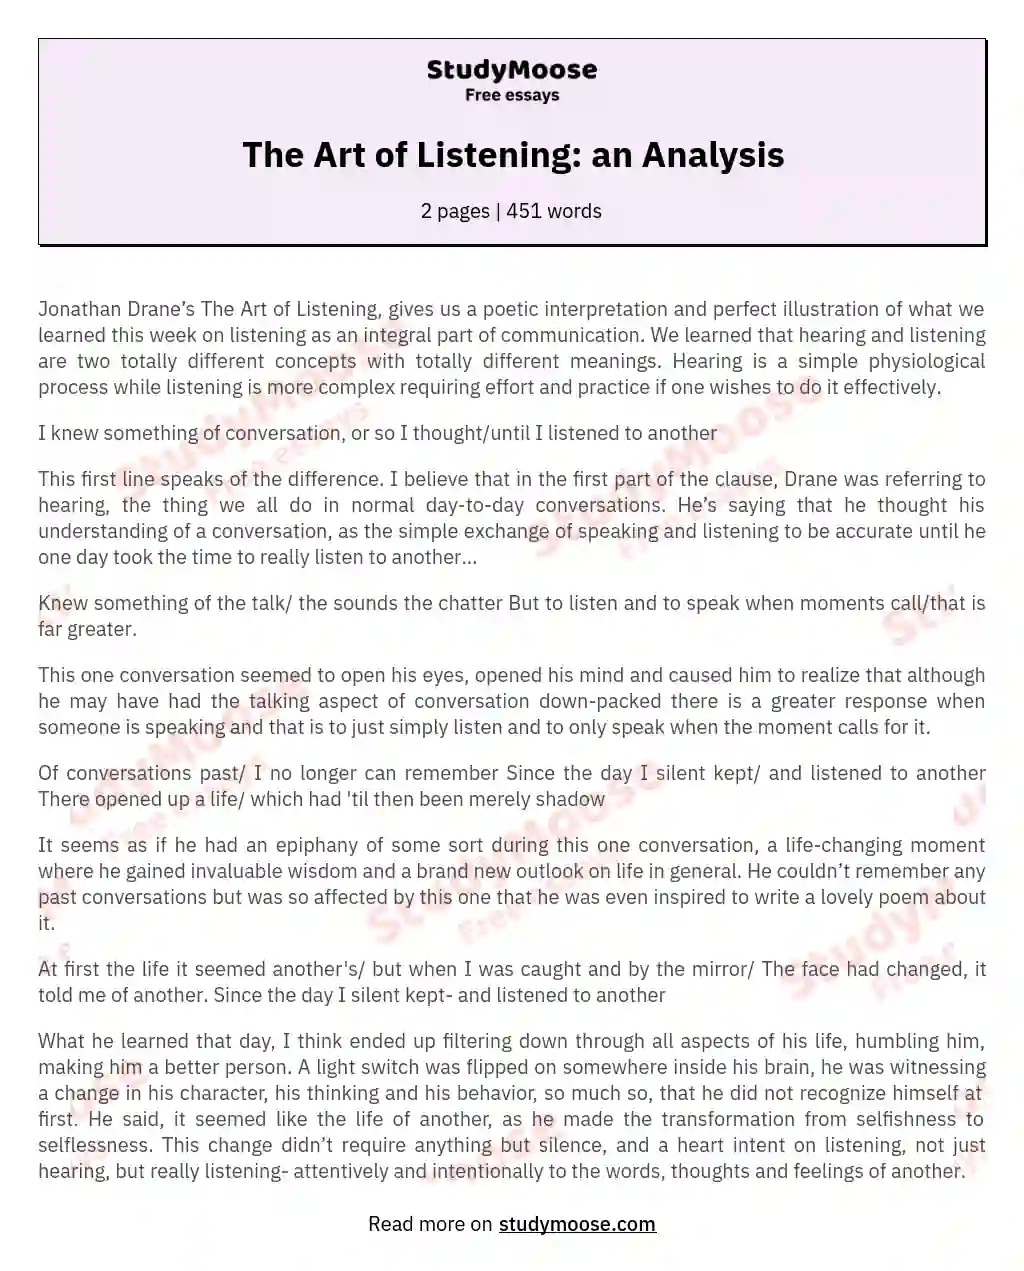 The Art of Listening: an Analysis essay